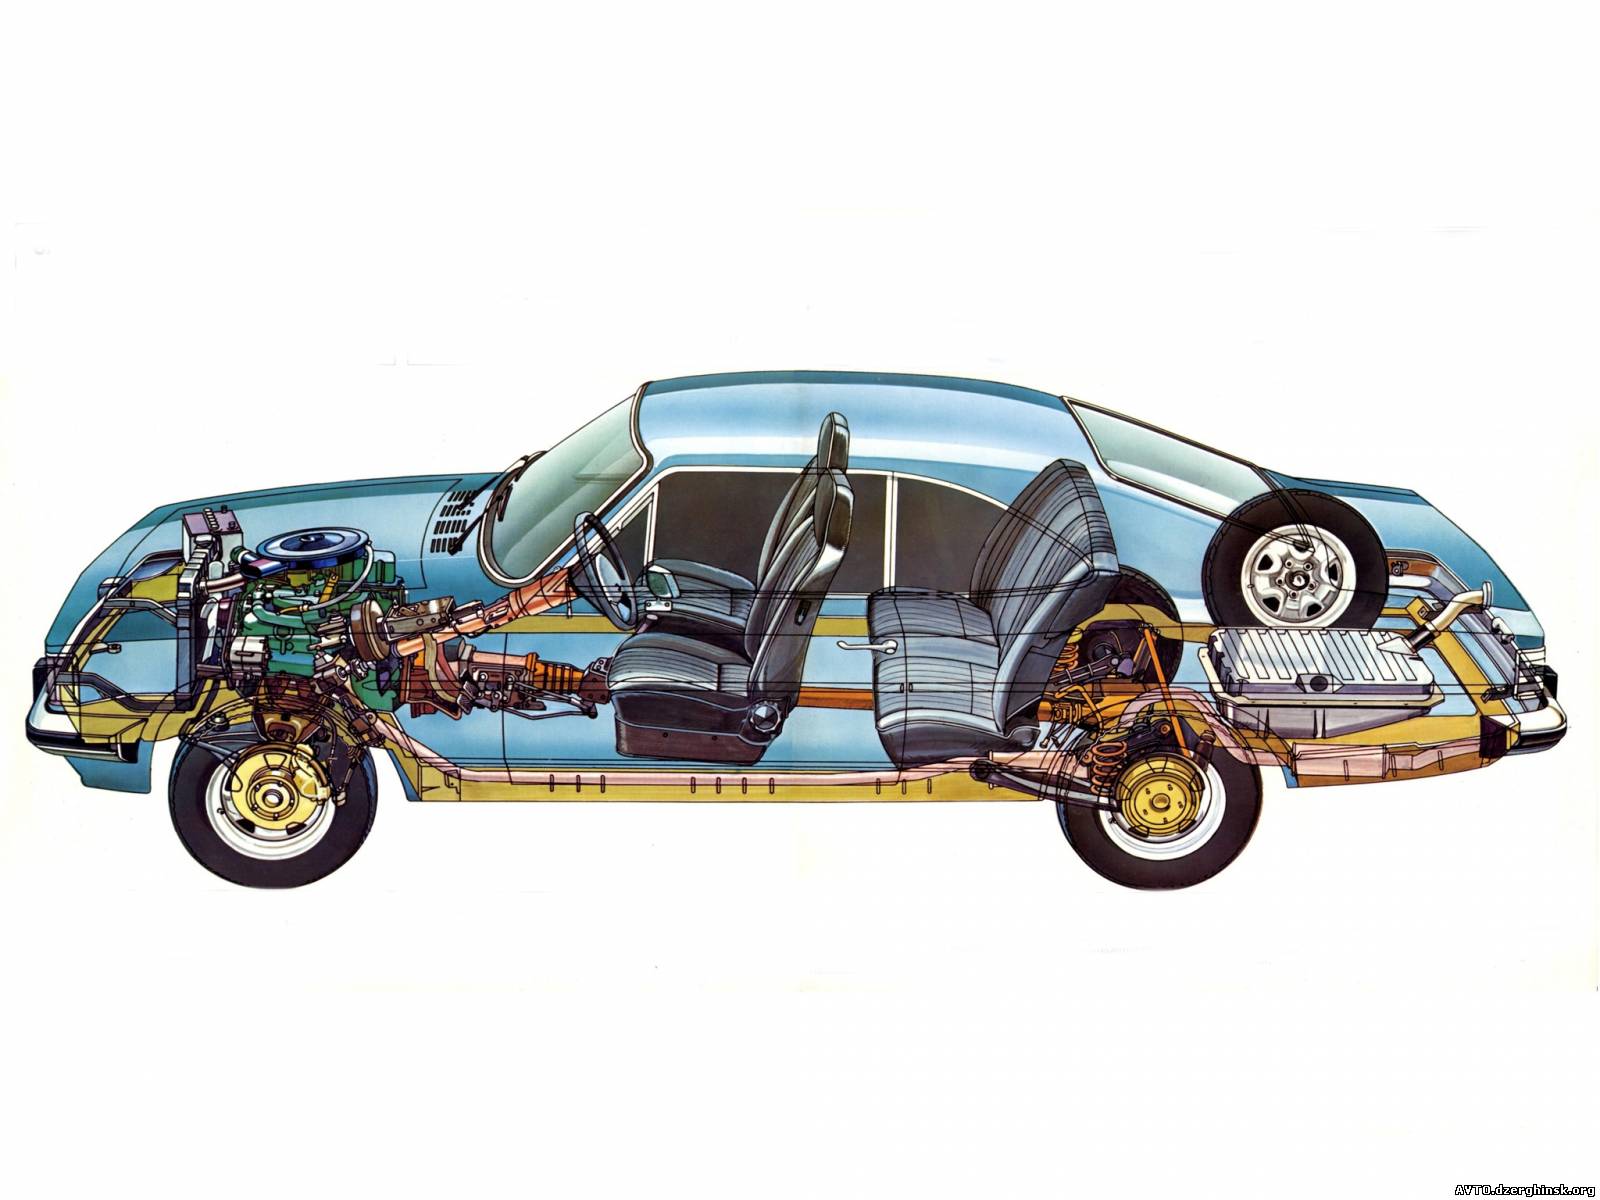 118. Chevrolet Opala 1981